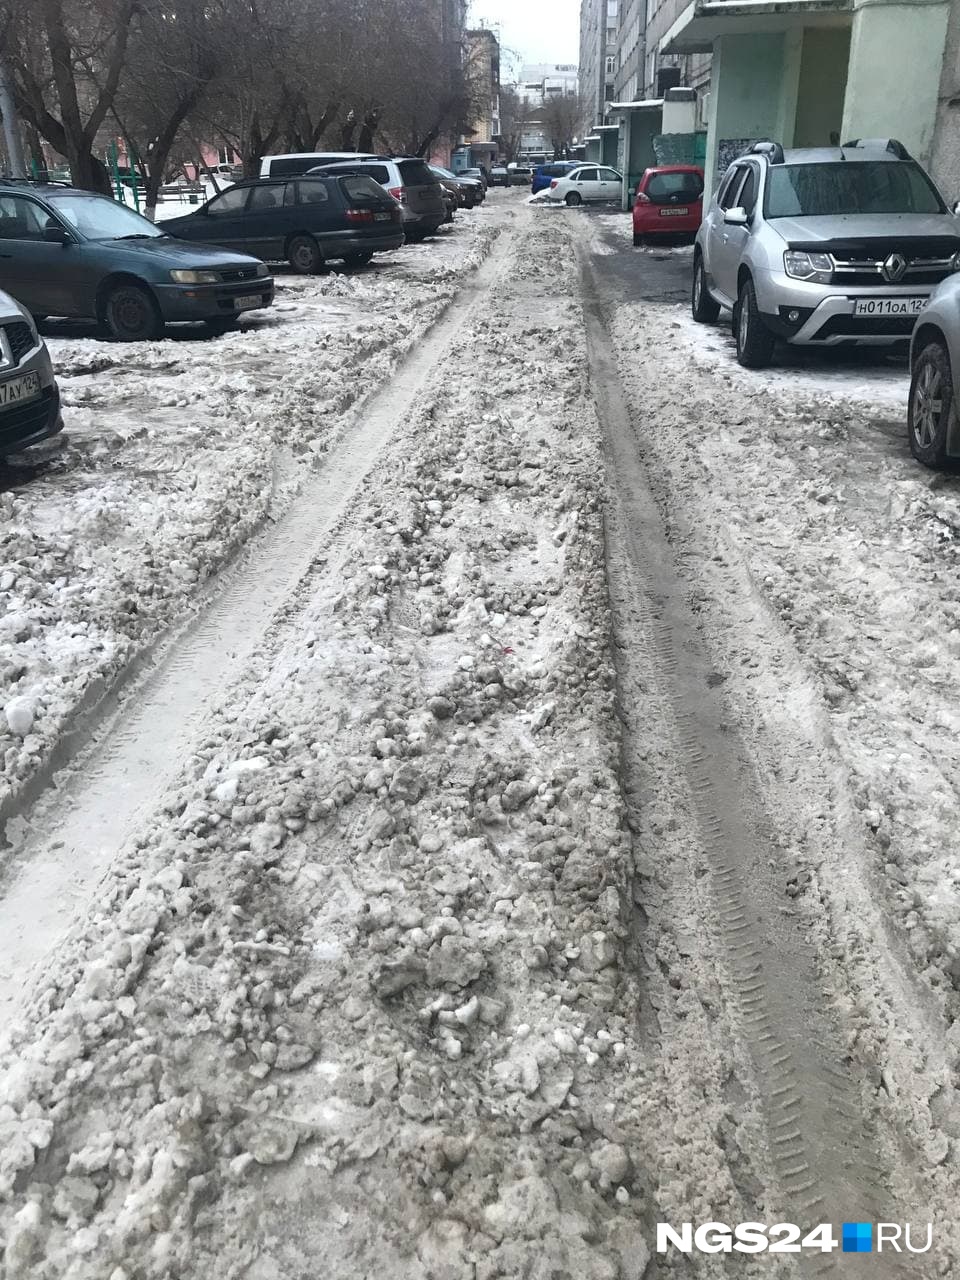 Месиво снега во дворах мешает проезду и парковке